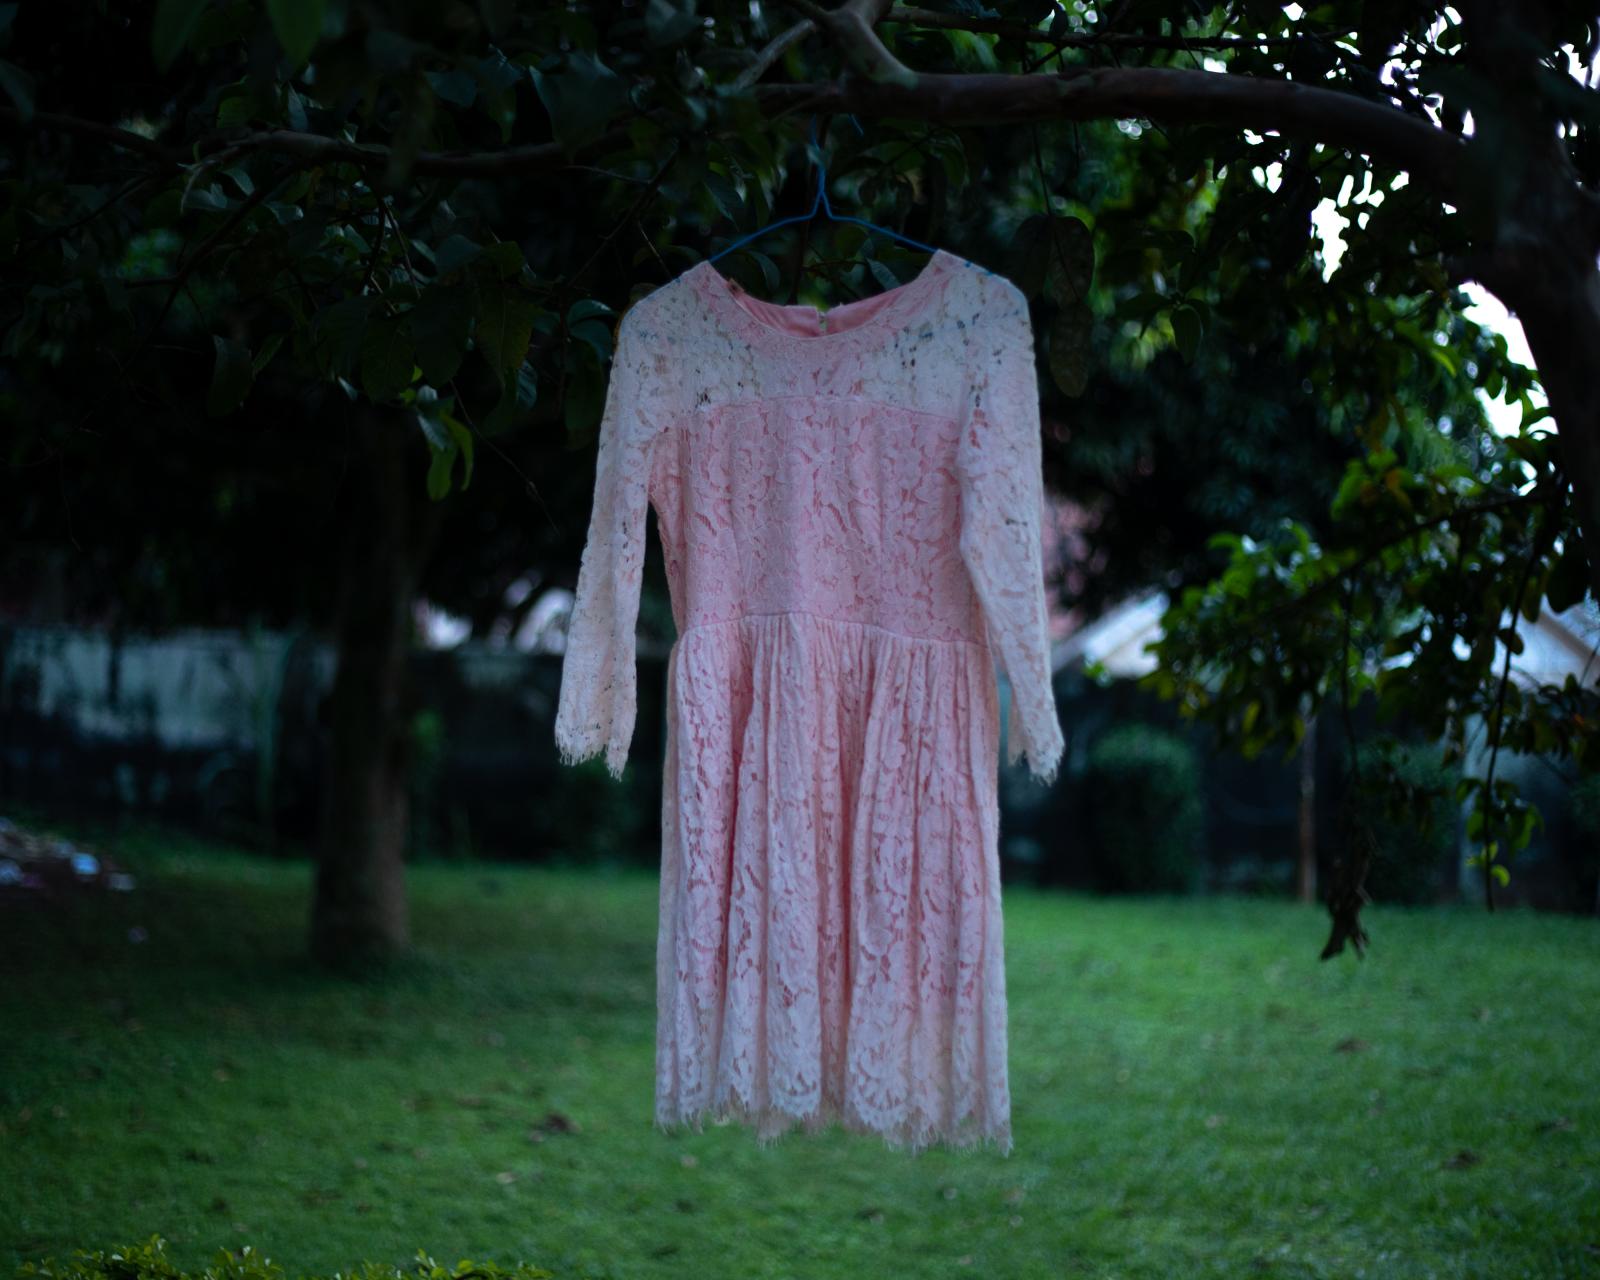 Image from Surviving Bery: A Girlhood Trauma | DeLovie Kwagala  - “I feel like a grown up wearing this dress. He...